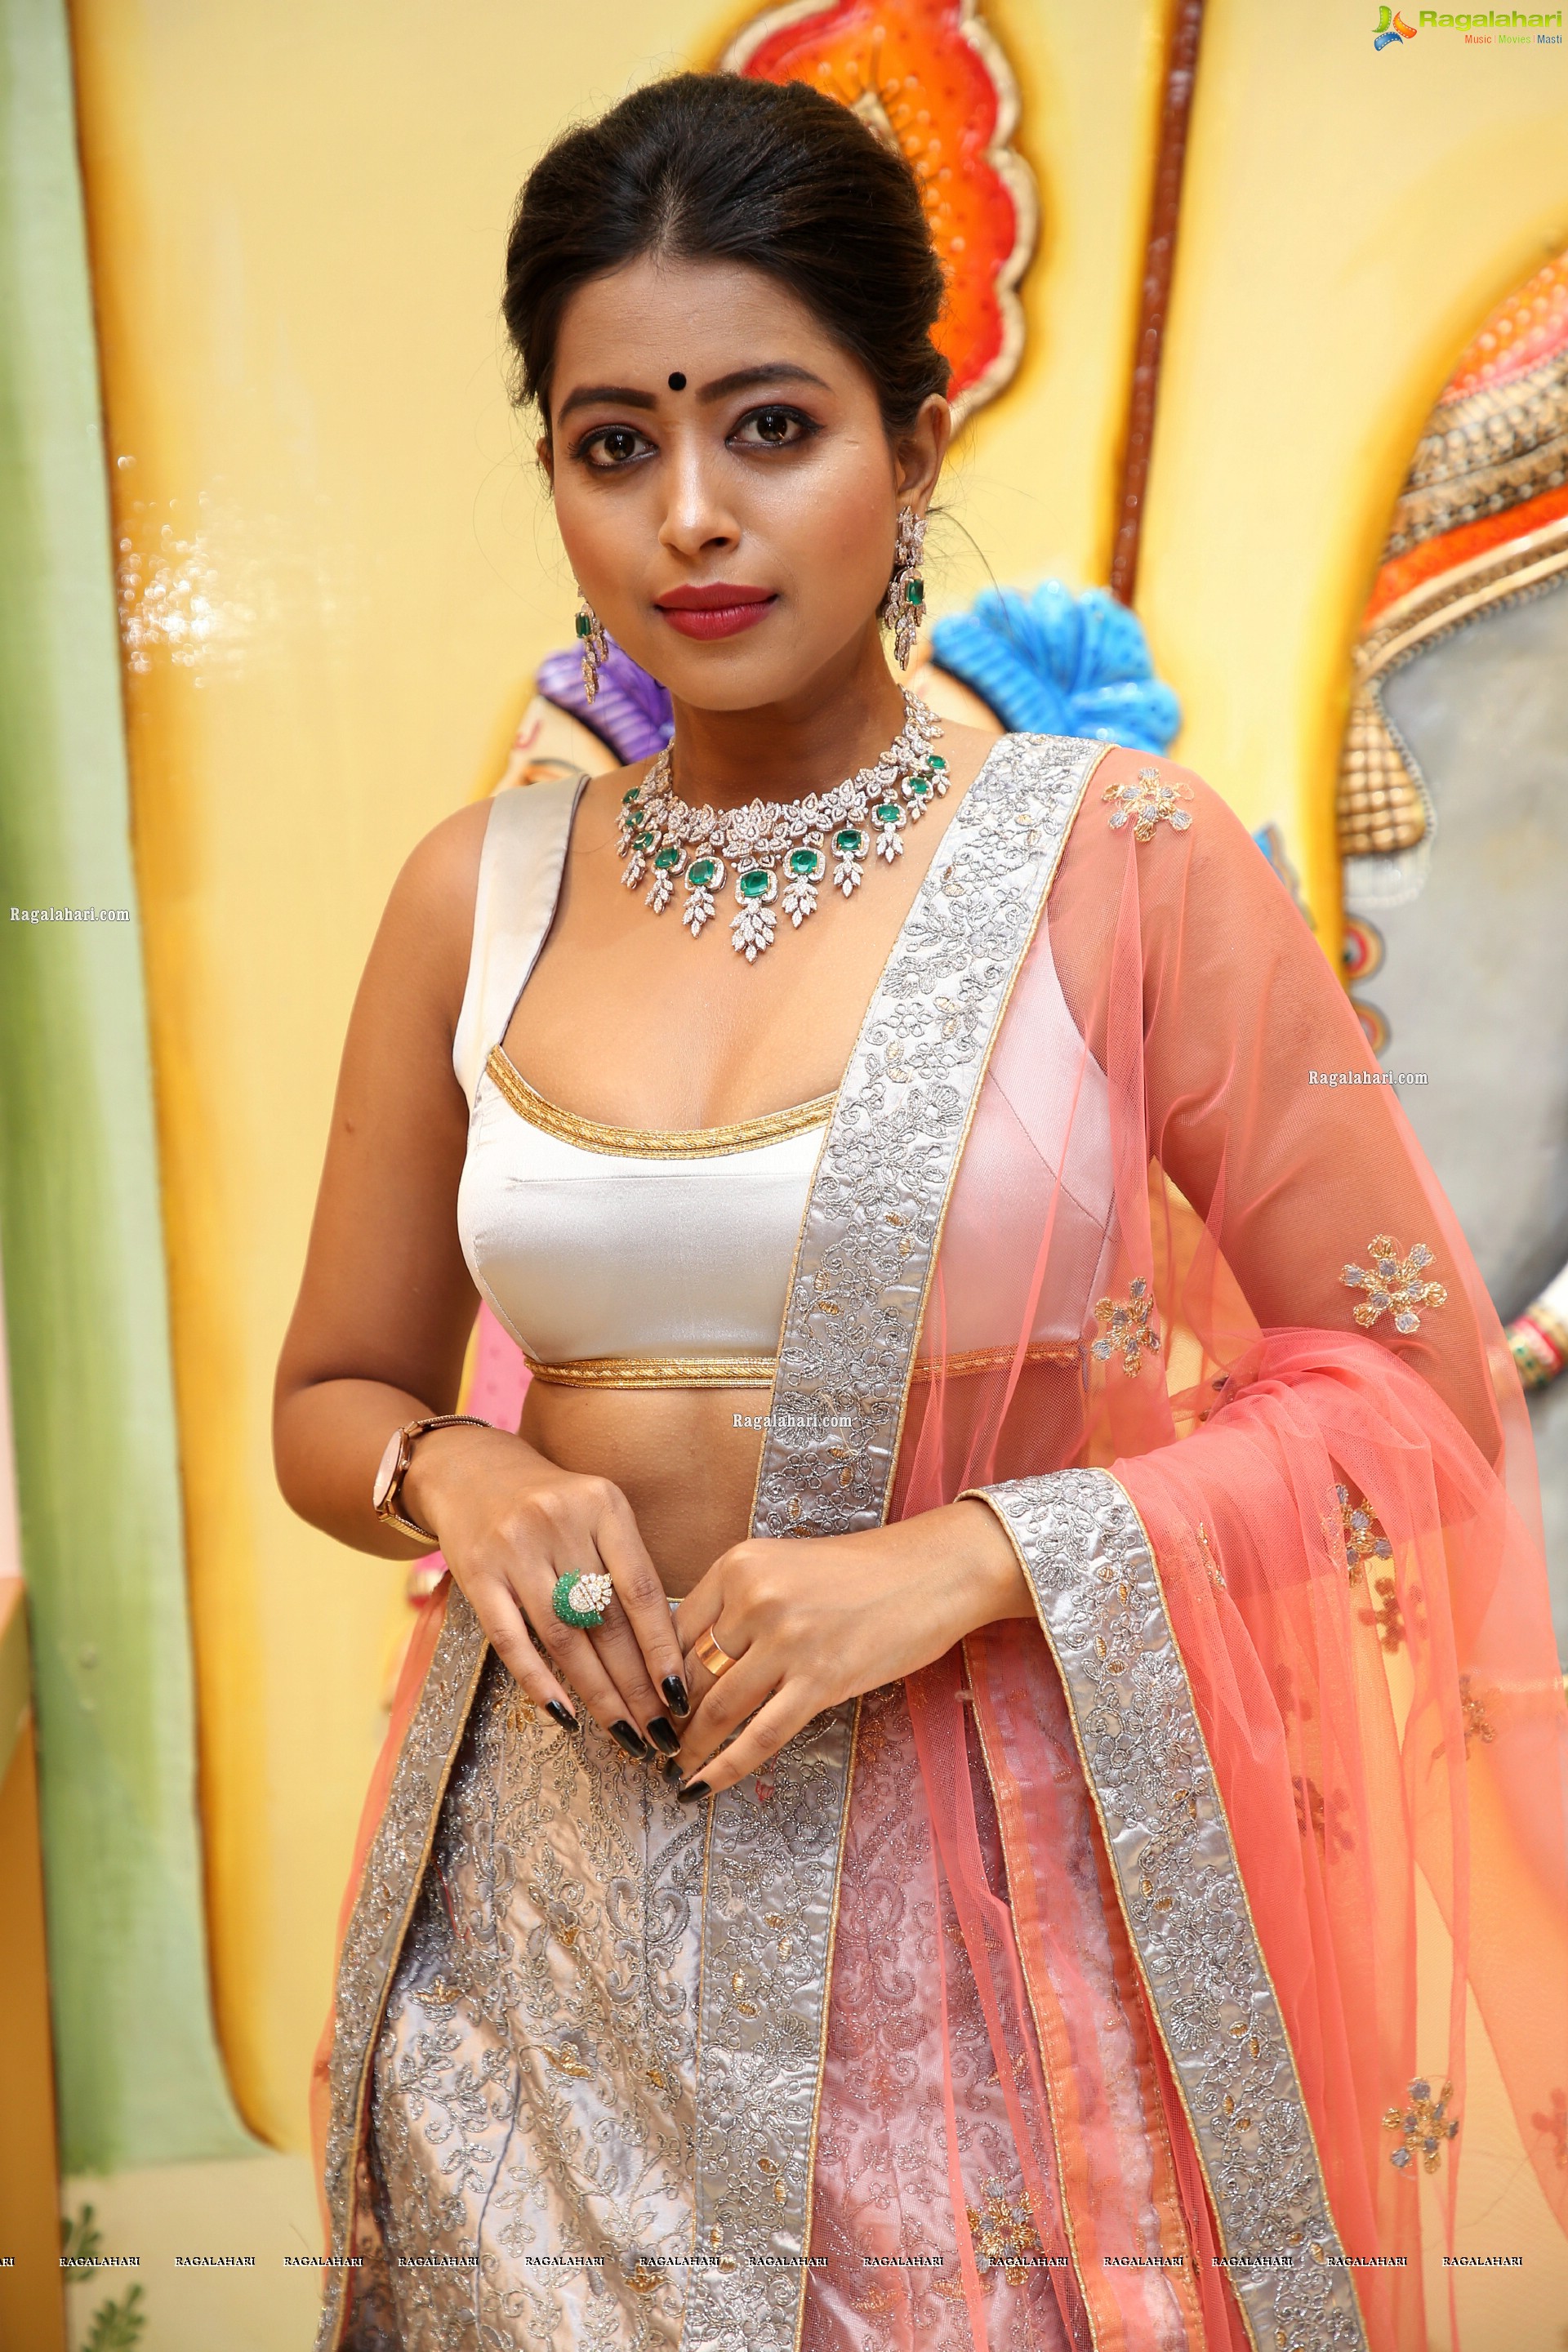 Rittika Chakraborty Poses With Gold Jewellery, HD Photo Gallery